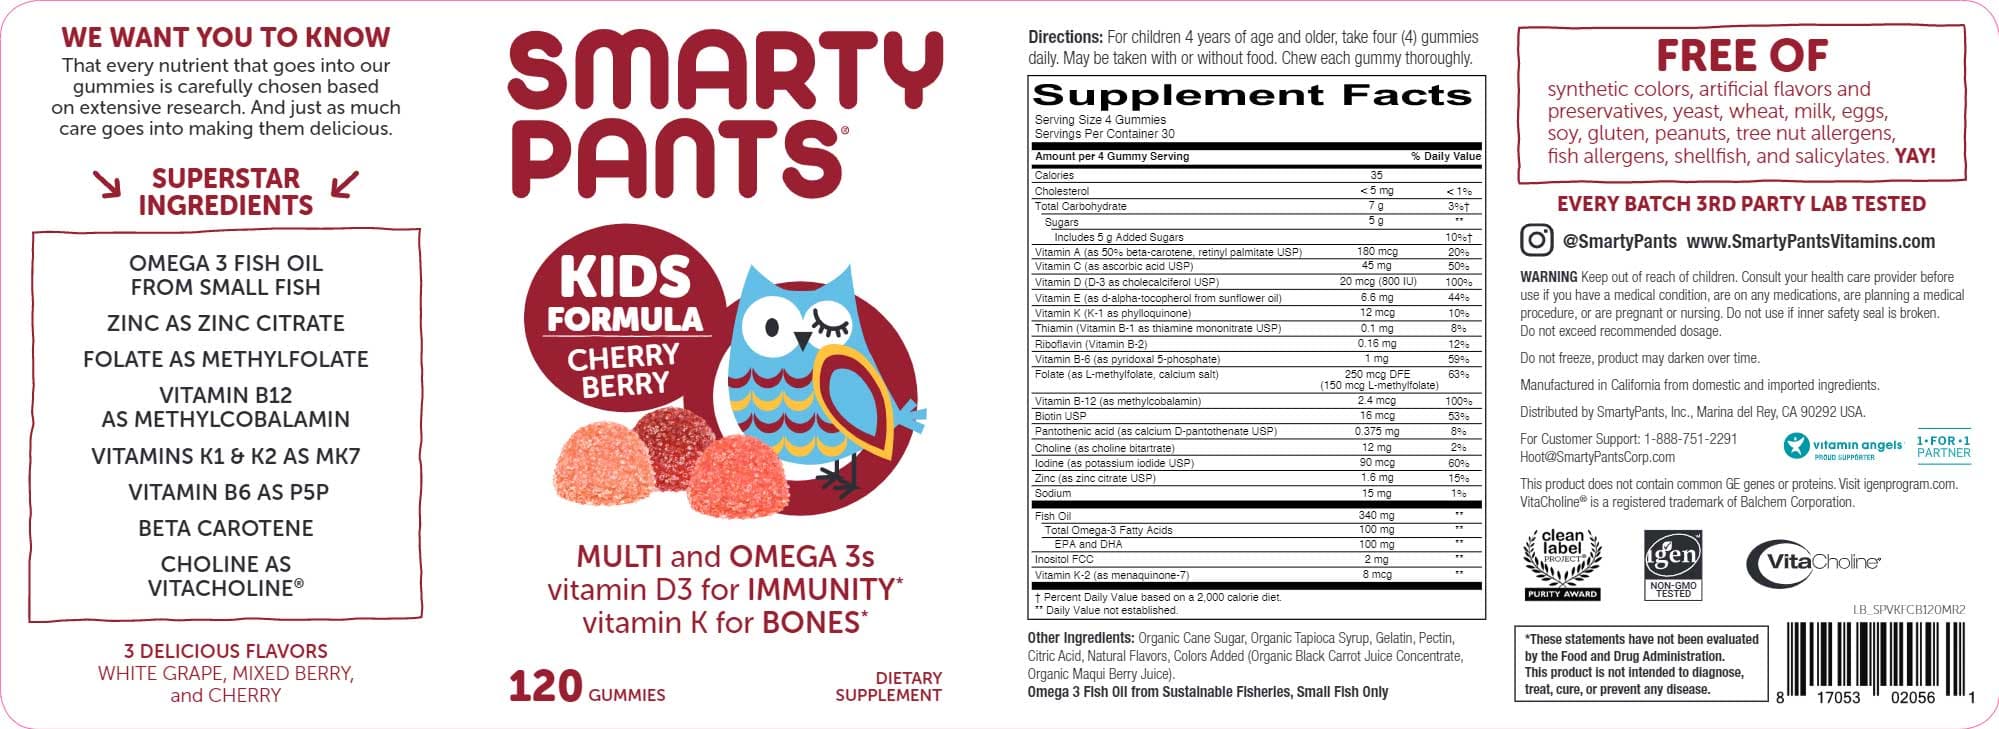 SmartyPants Kids Formula Cherry Berry Ingredients